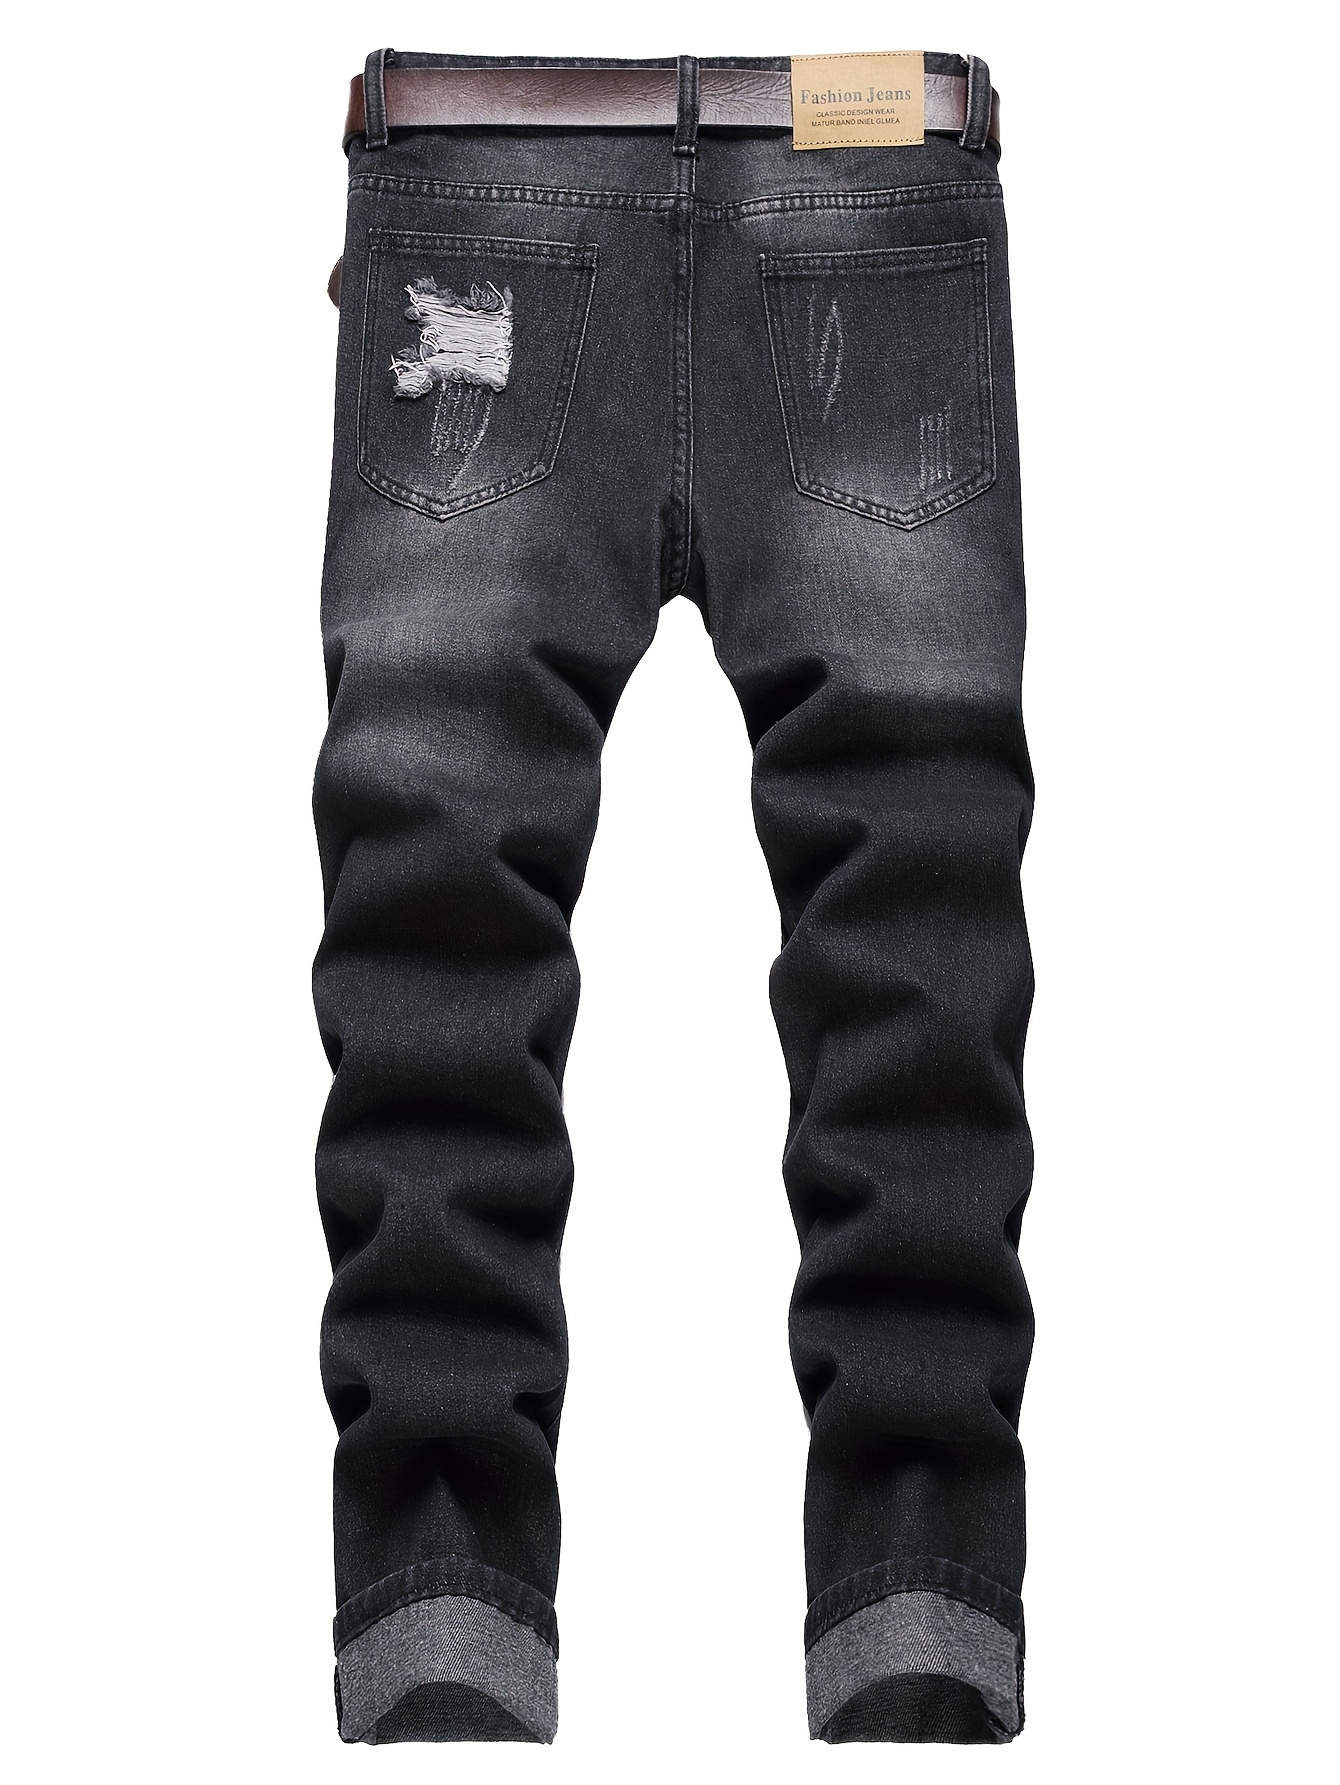 Ripped Jeans Black, Men's Clothing & Fashion